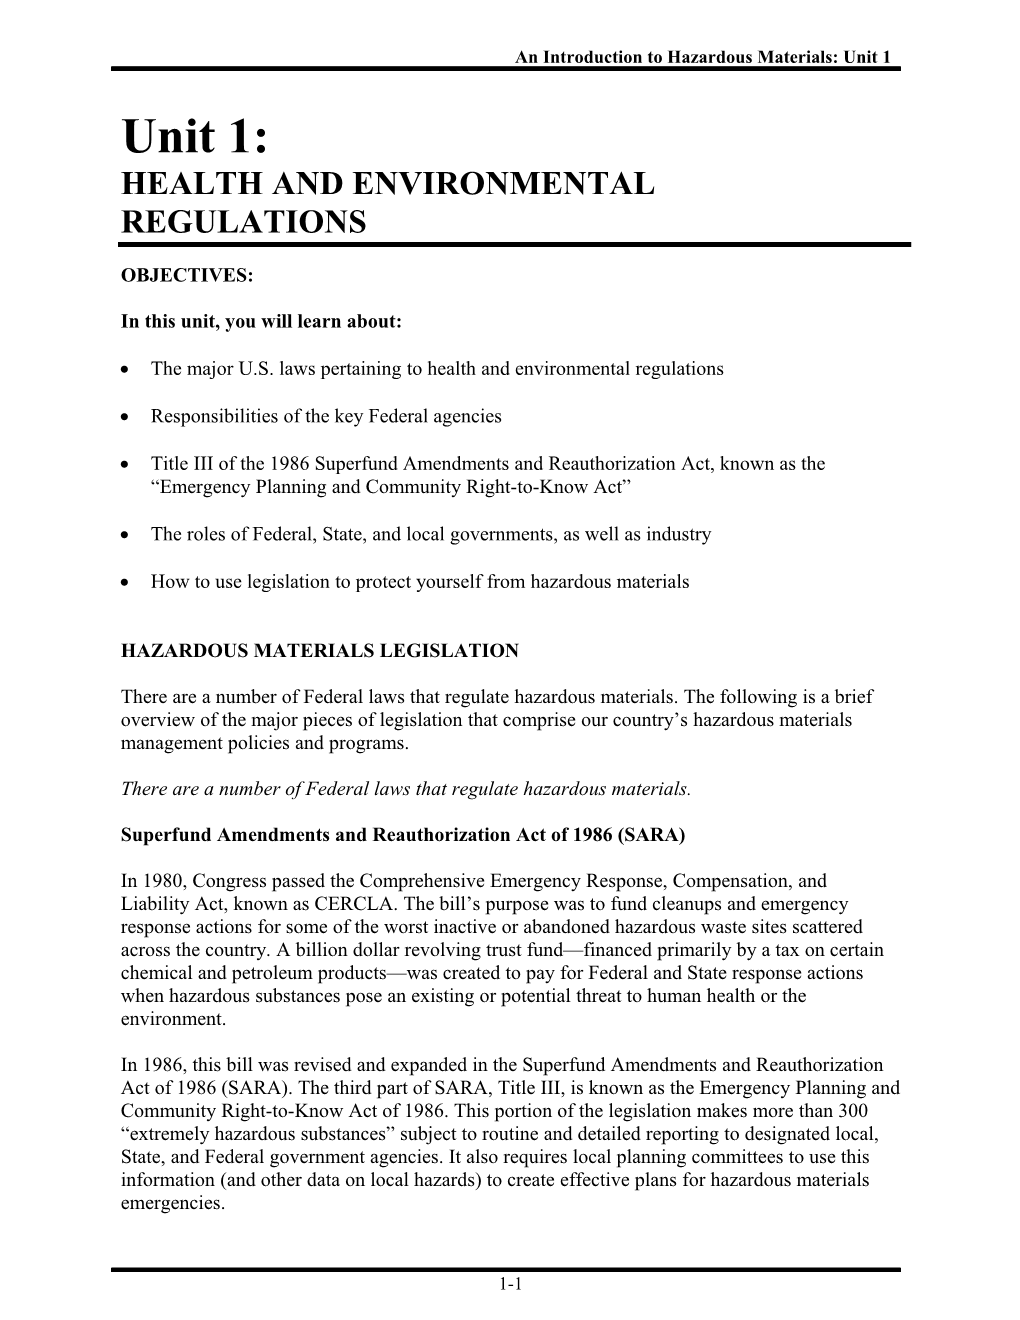 Health and Environmental Regulations